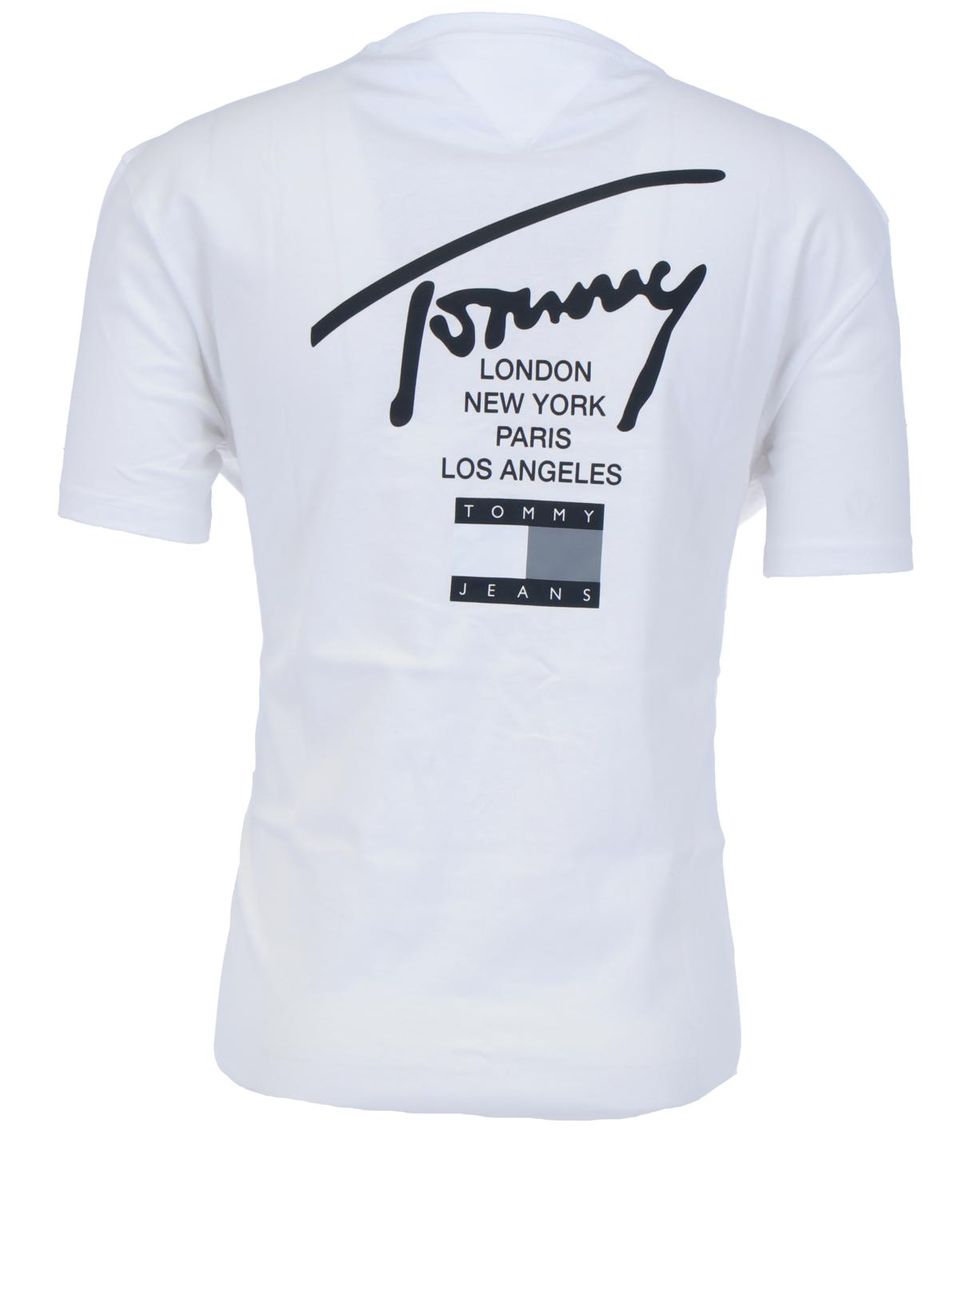 TOMMY JEANS T-SHIRT Herren T-Shirt